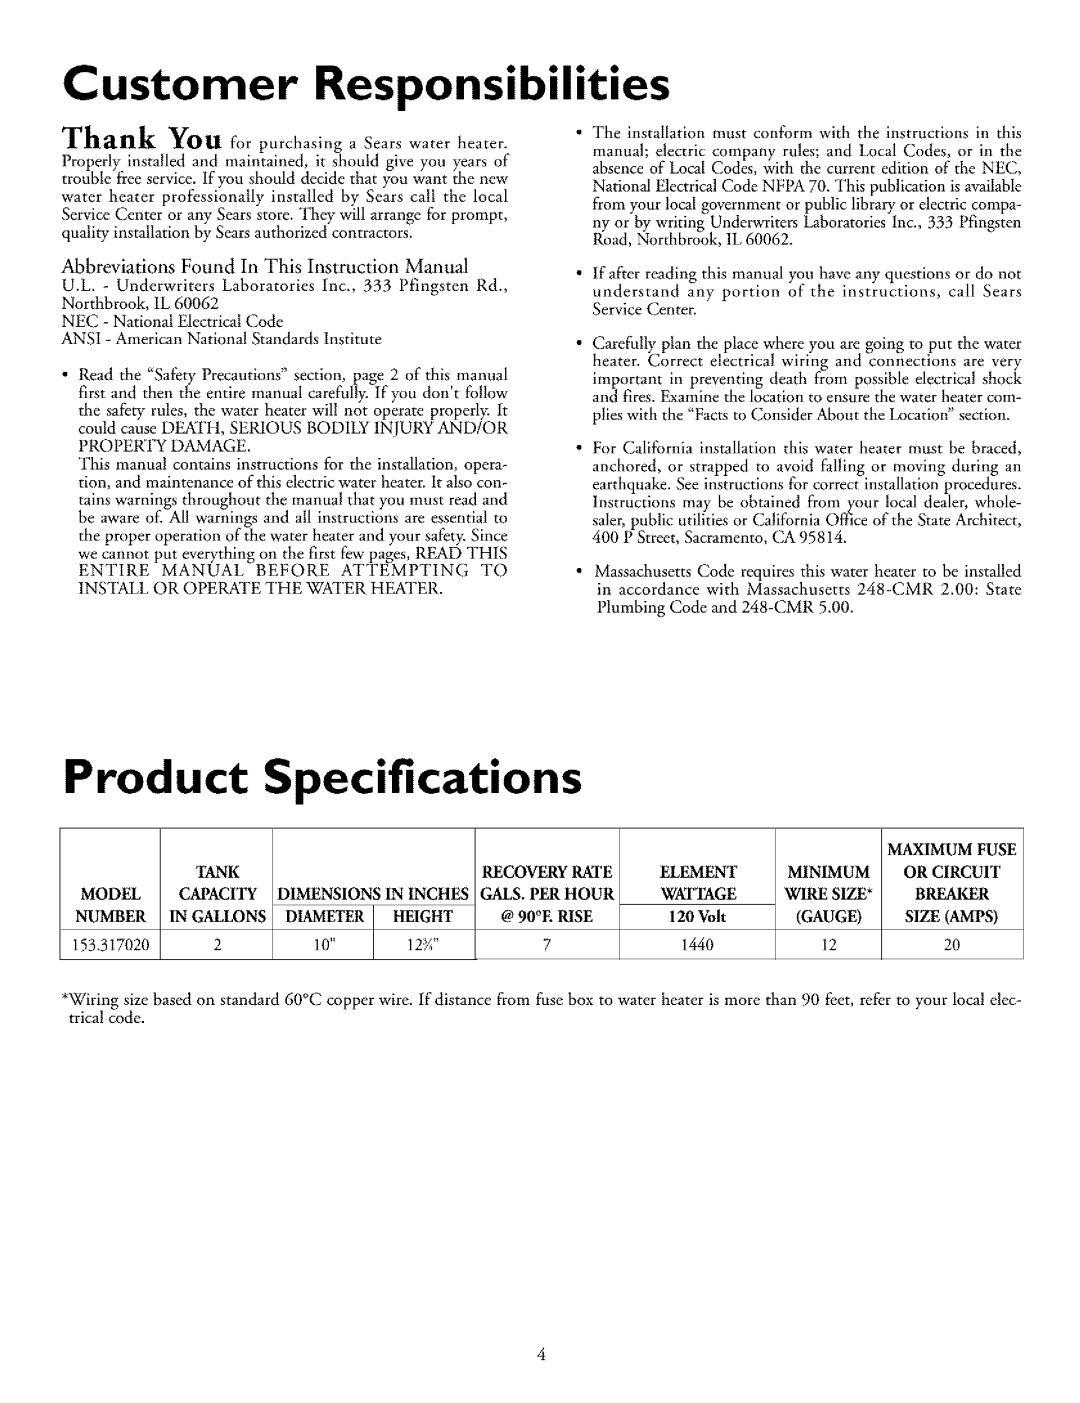 Kenmore 153.31702 owner manual Product, Specifications, Customer Responsibilities, Model, Breaker, Number 